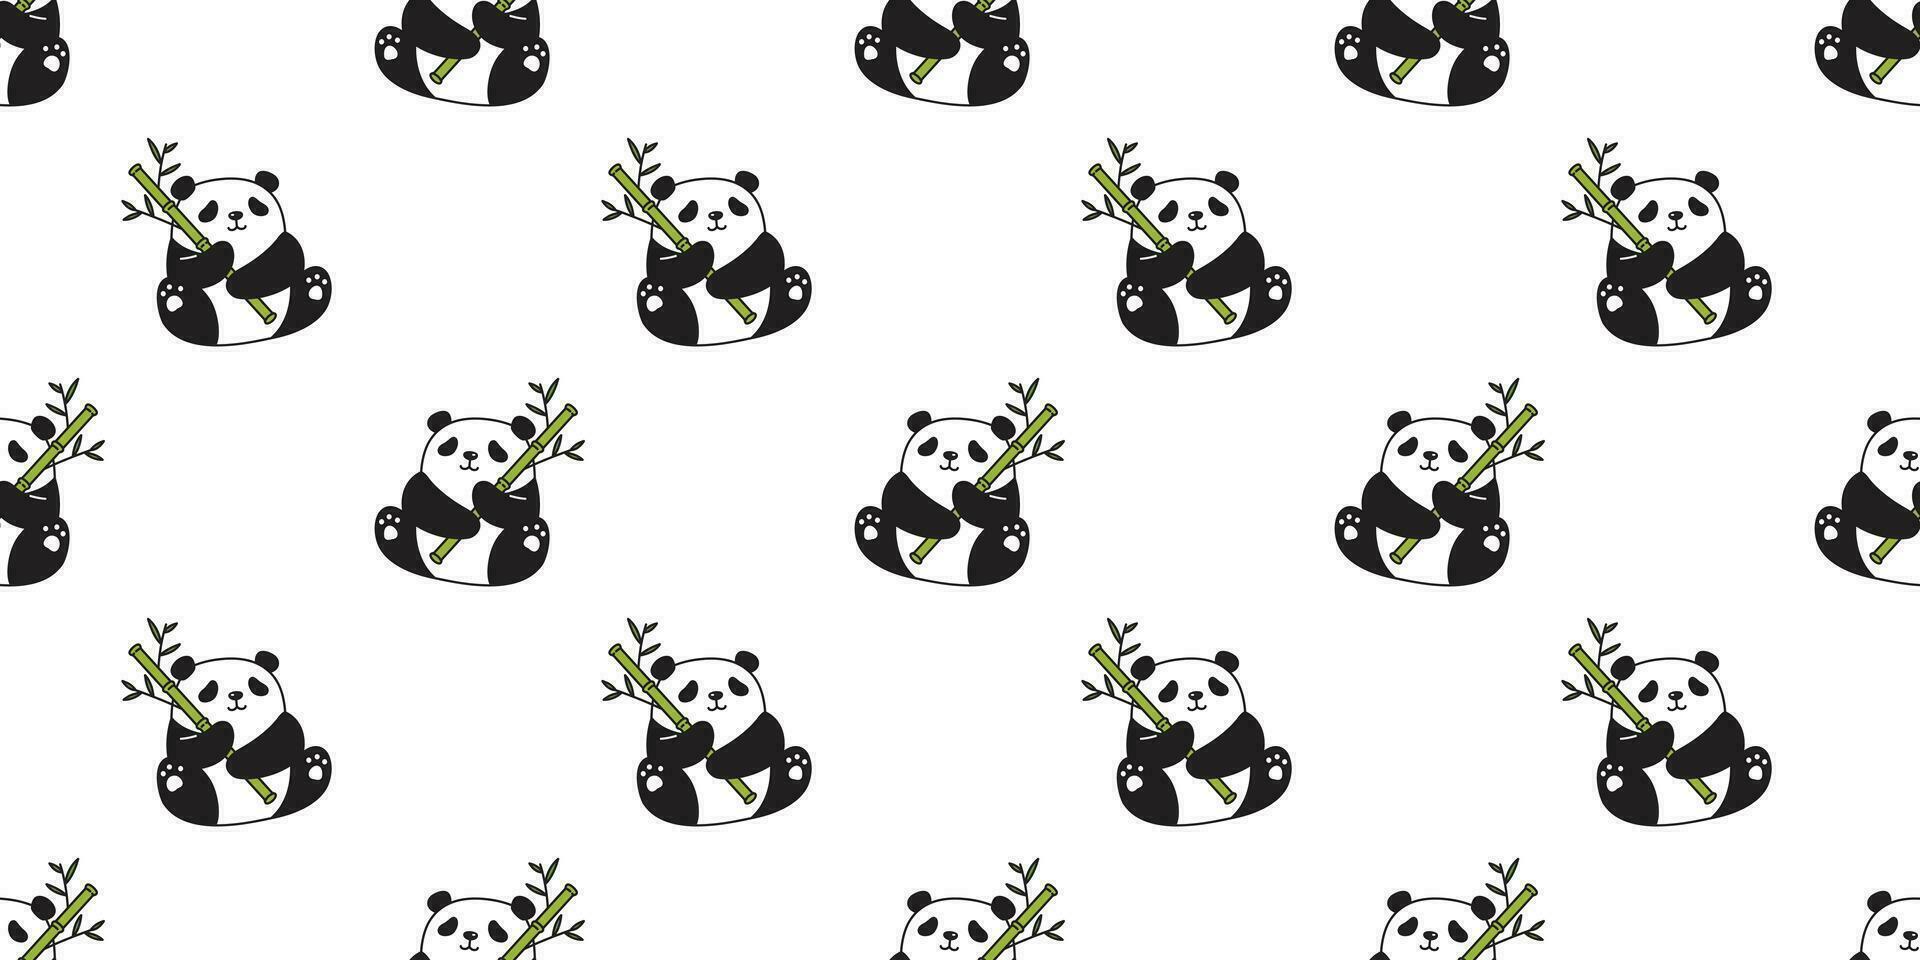 Bear seamless pattern vector panda polar bear bamboo teddy scarf isolated wallpaper repeat tile background cartoon character illustration doodle